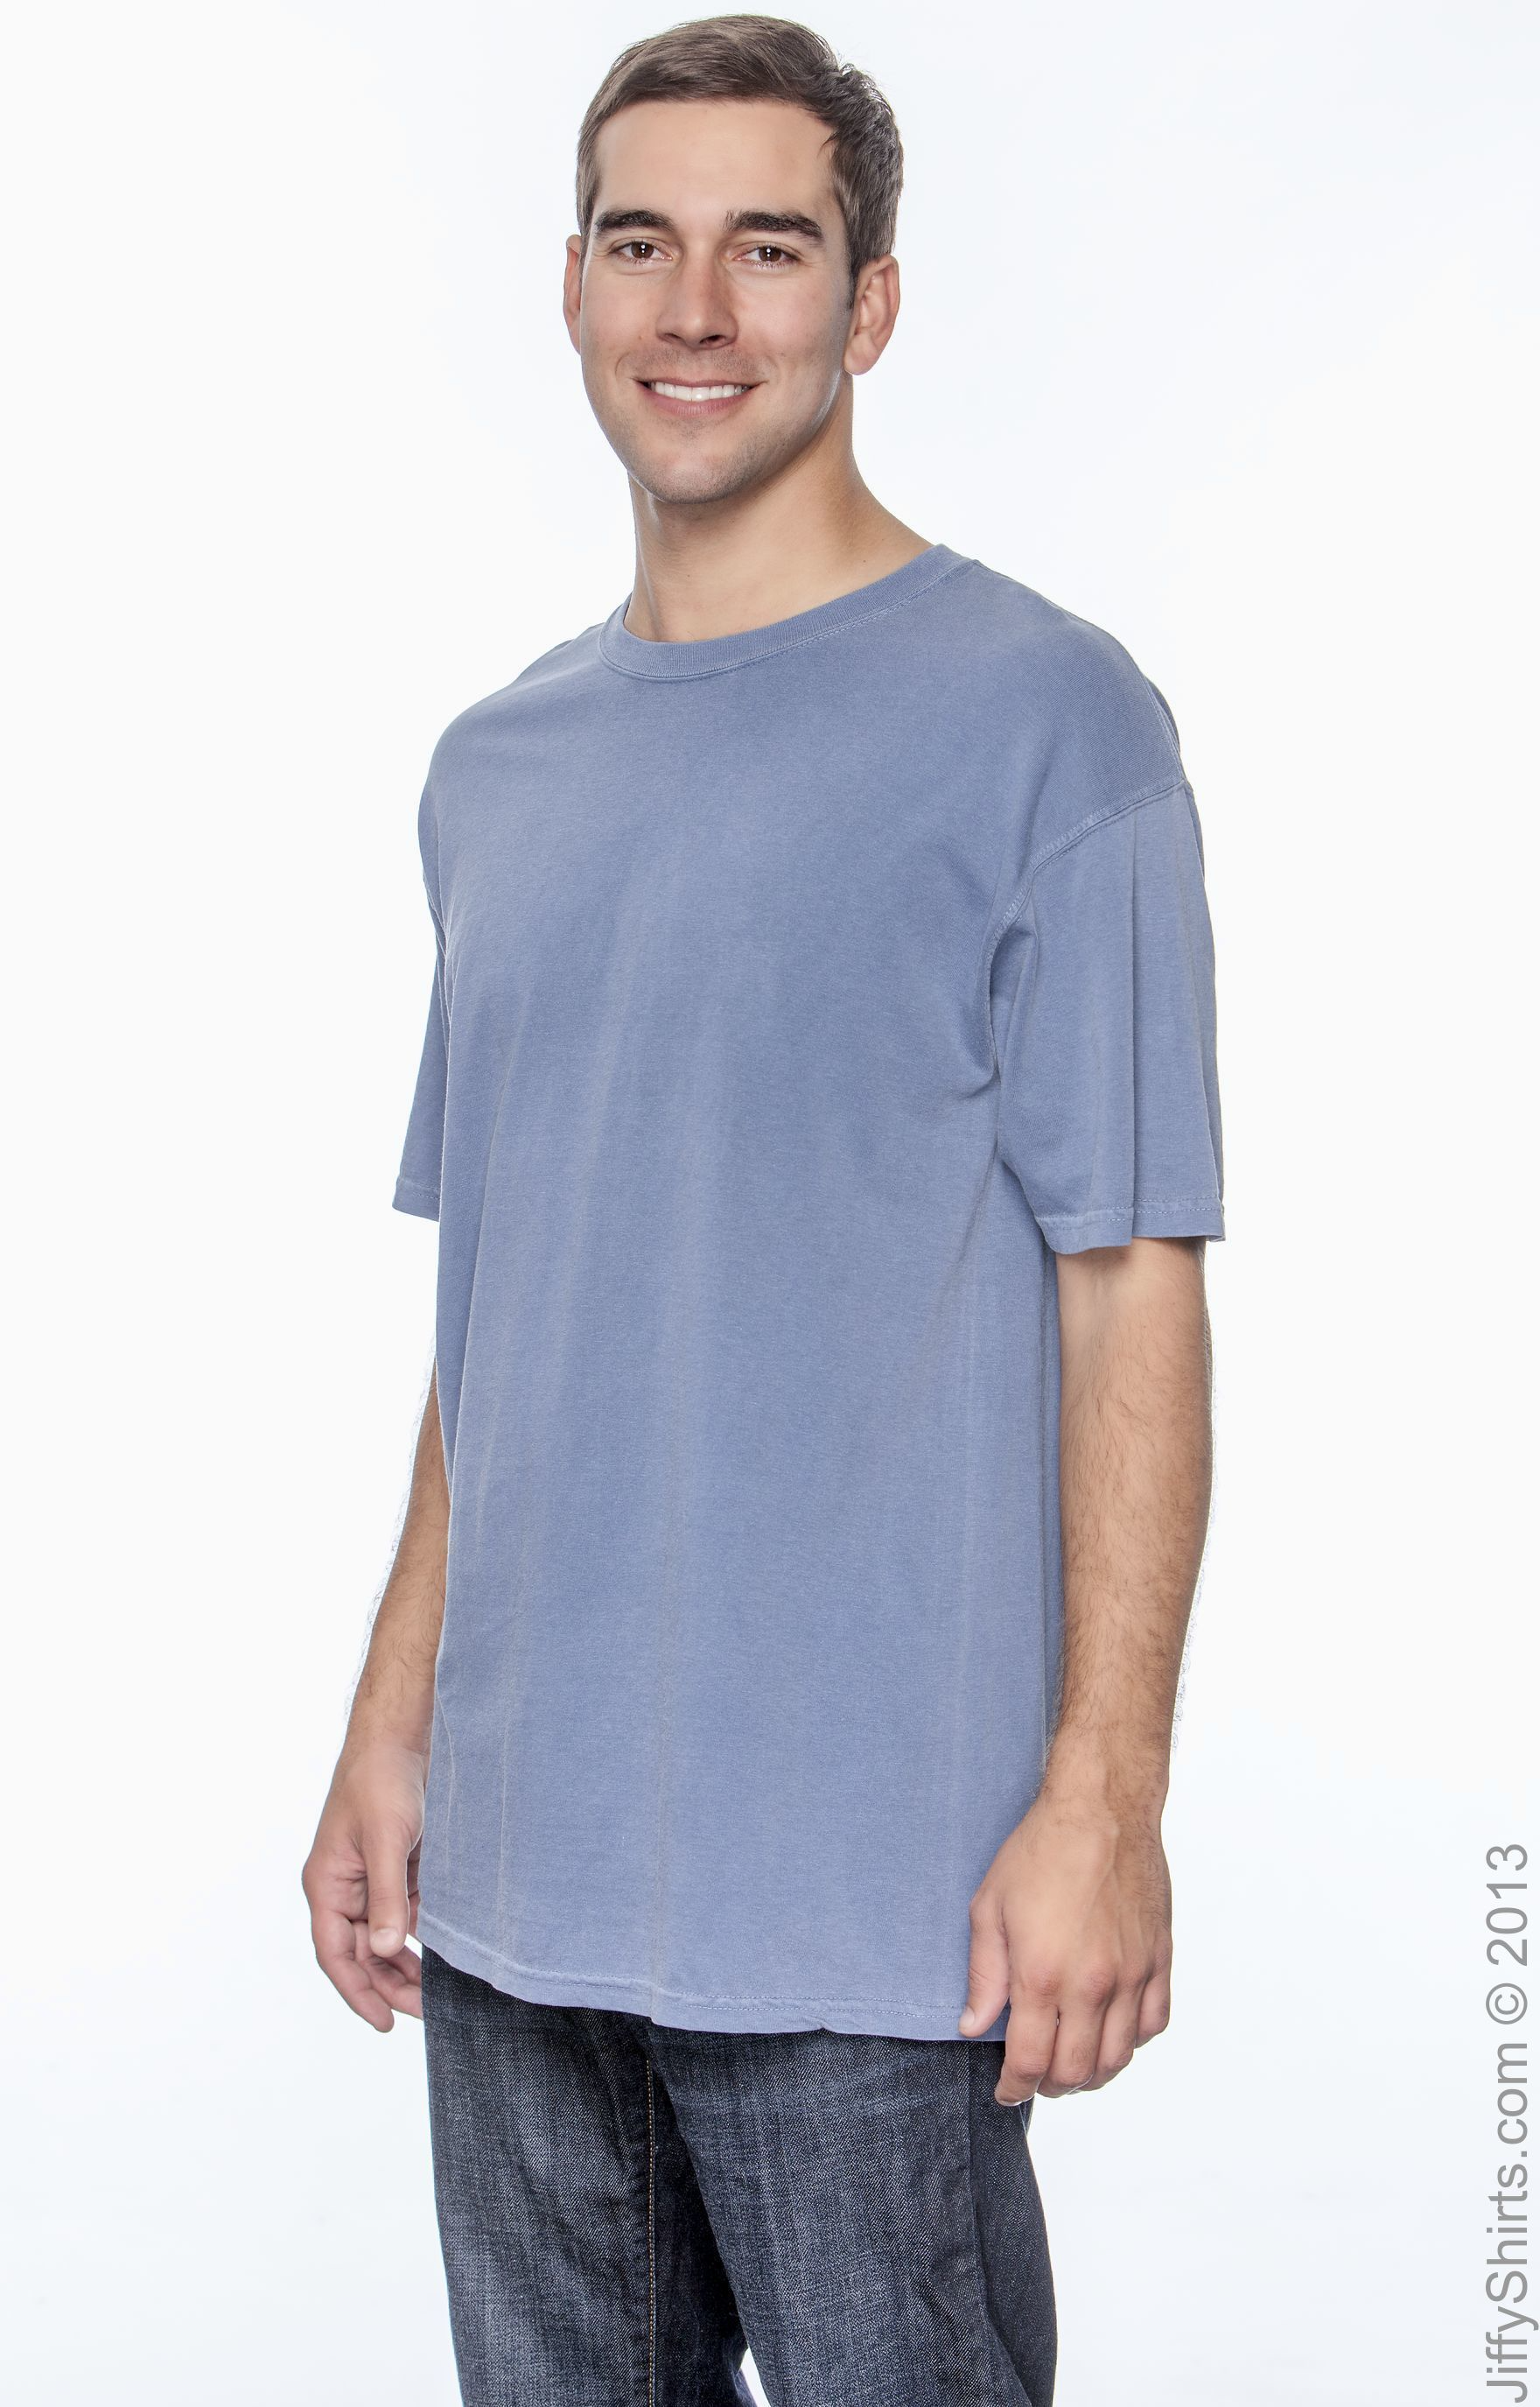 Regular Fit Blue Printed Denim Shirt For Men - Peplos Jeans – Peplos Jeans